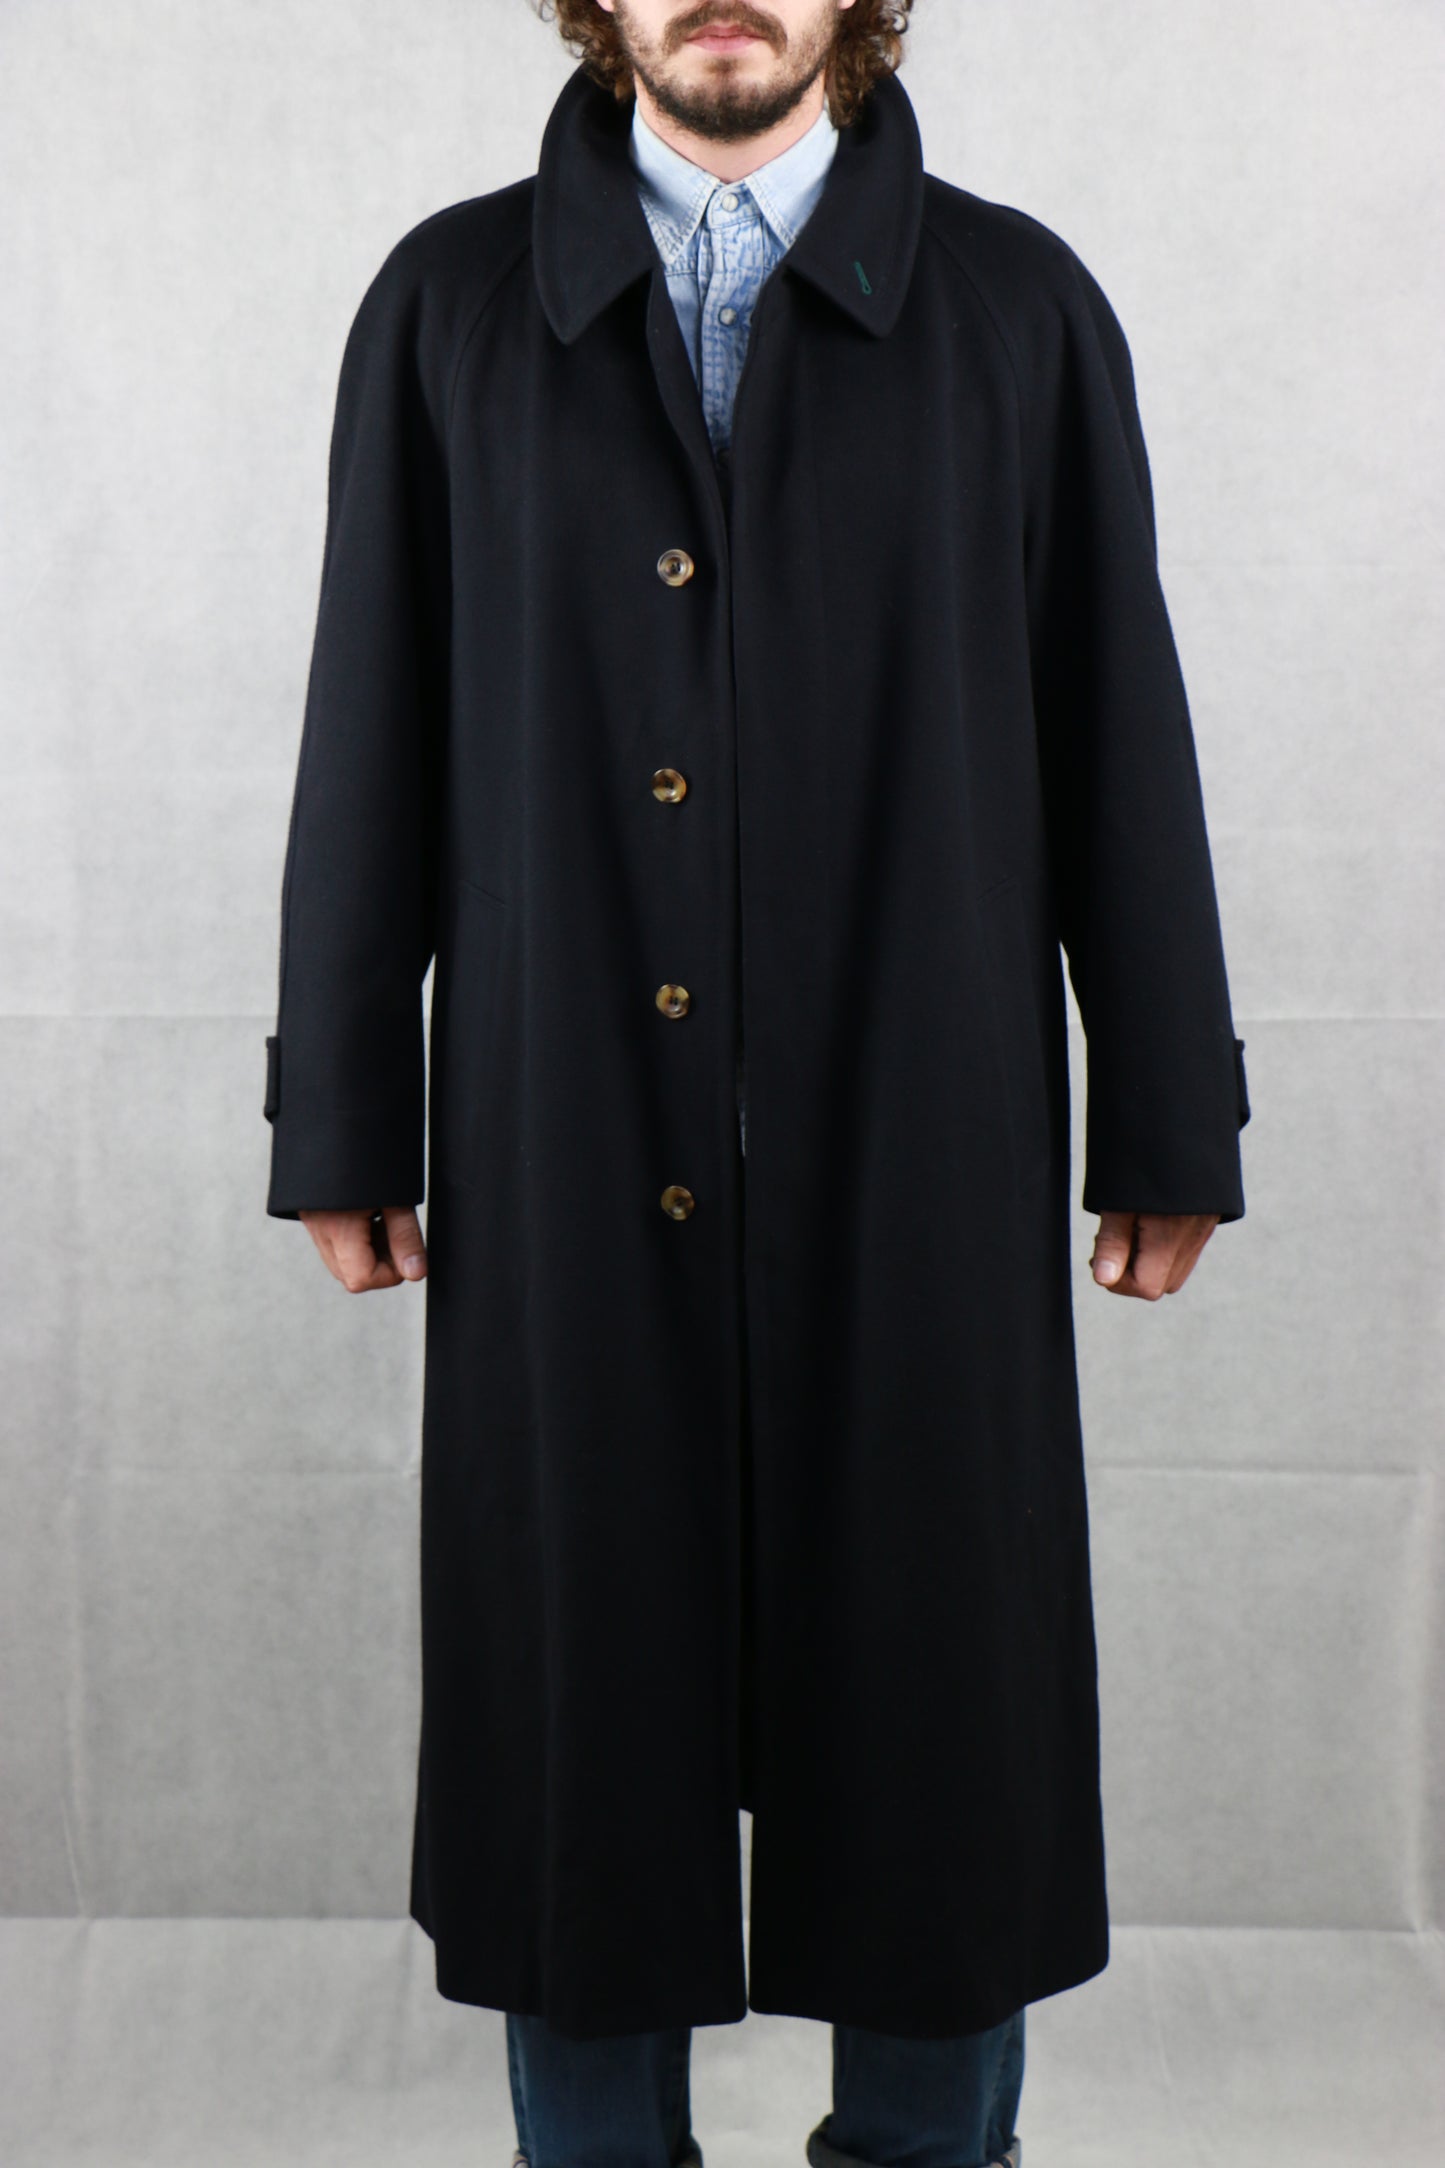 Yves Saint Laurent Coat, clochard92.com